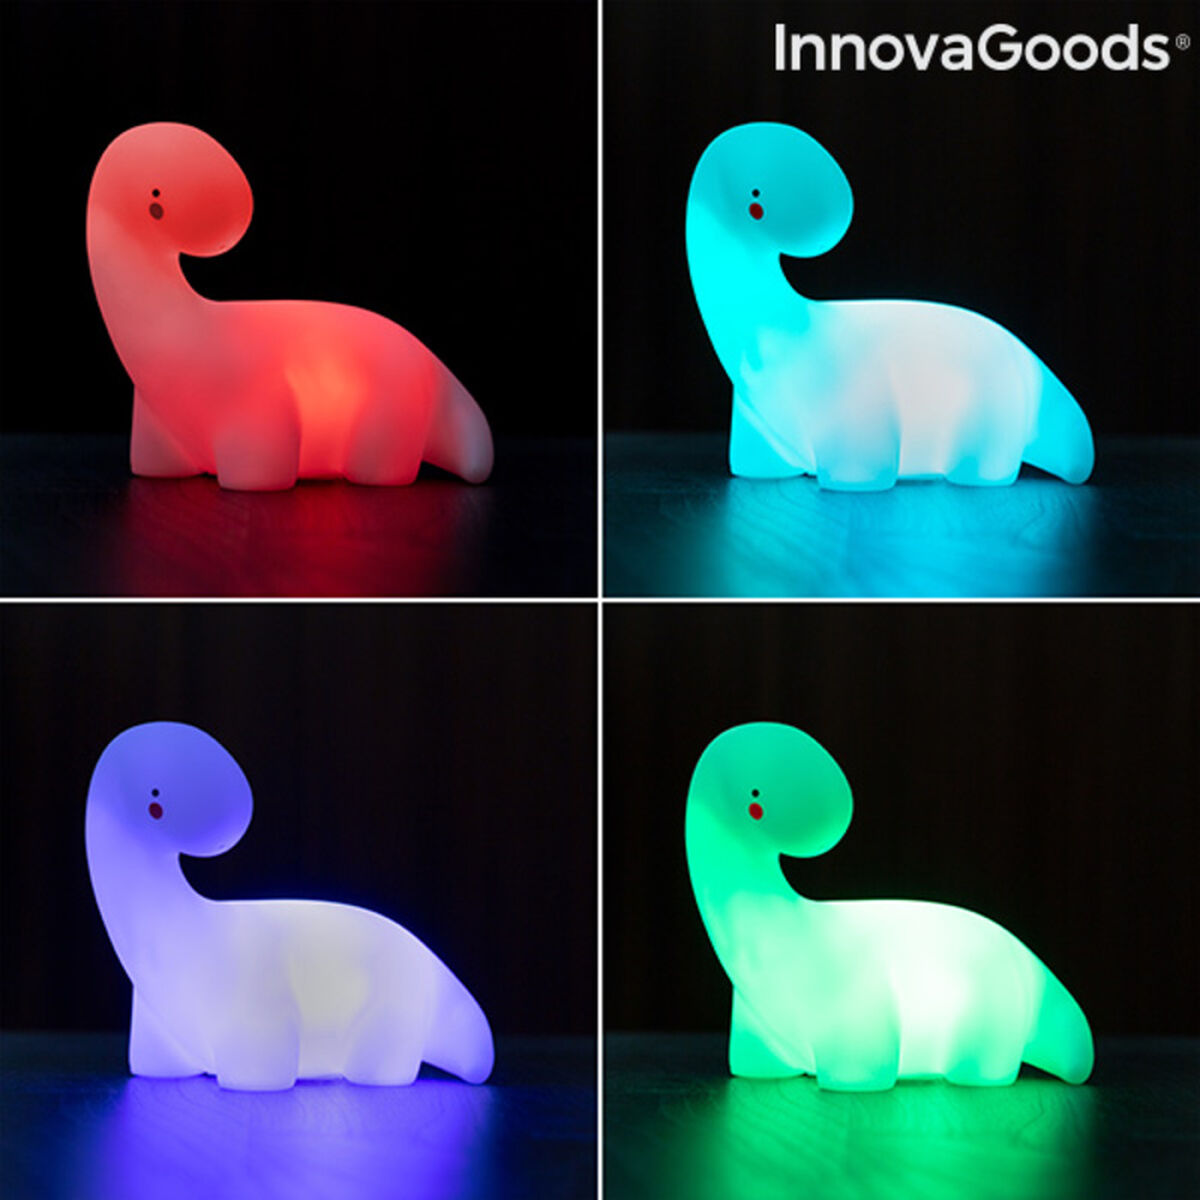 Lampada Dinosauro LED Multicolor Lightosaurus InnovaGoods IG815318 (Ricondizionati A)